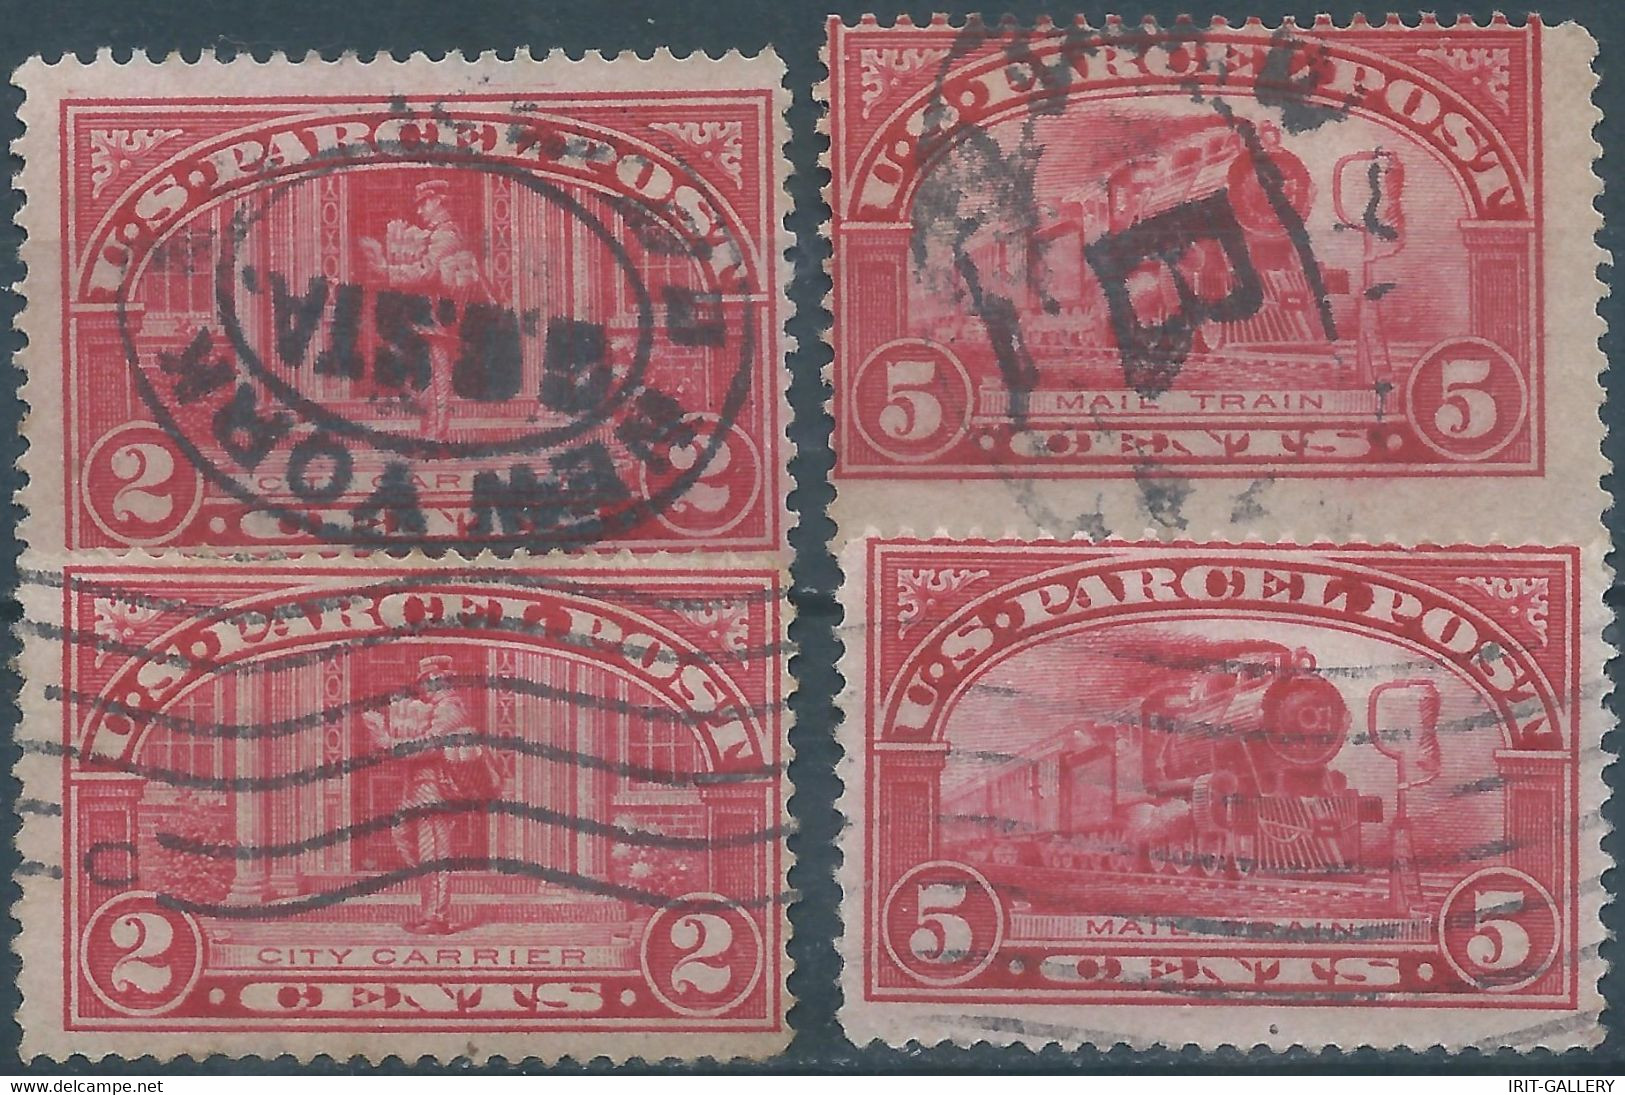 340-United States,U.S.A,Revenue Stamps PARCEL POST,2&5c,Used - Reisgoedzegels